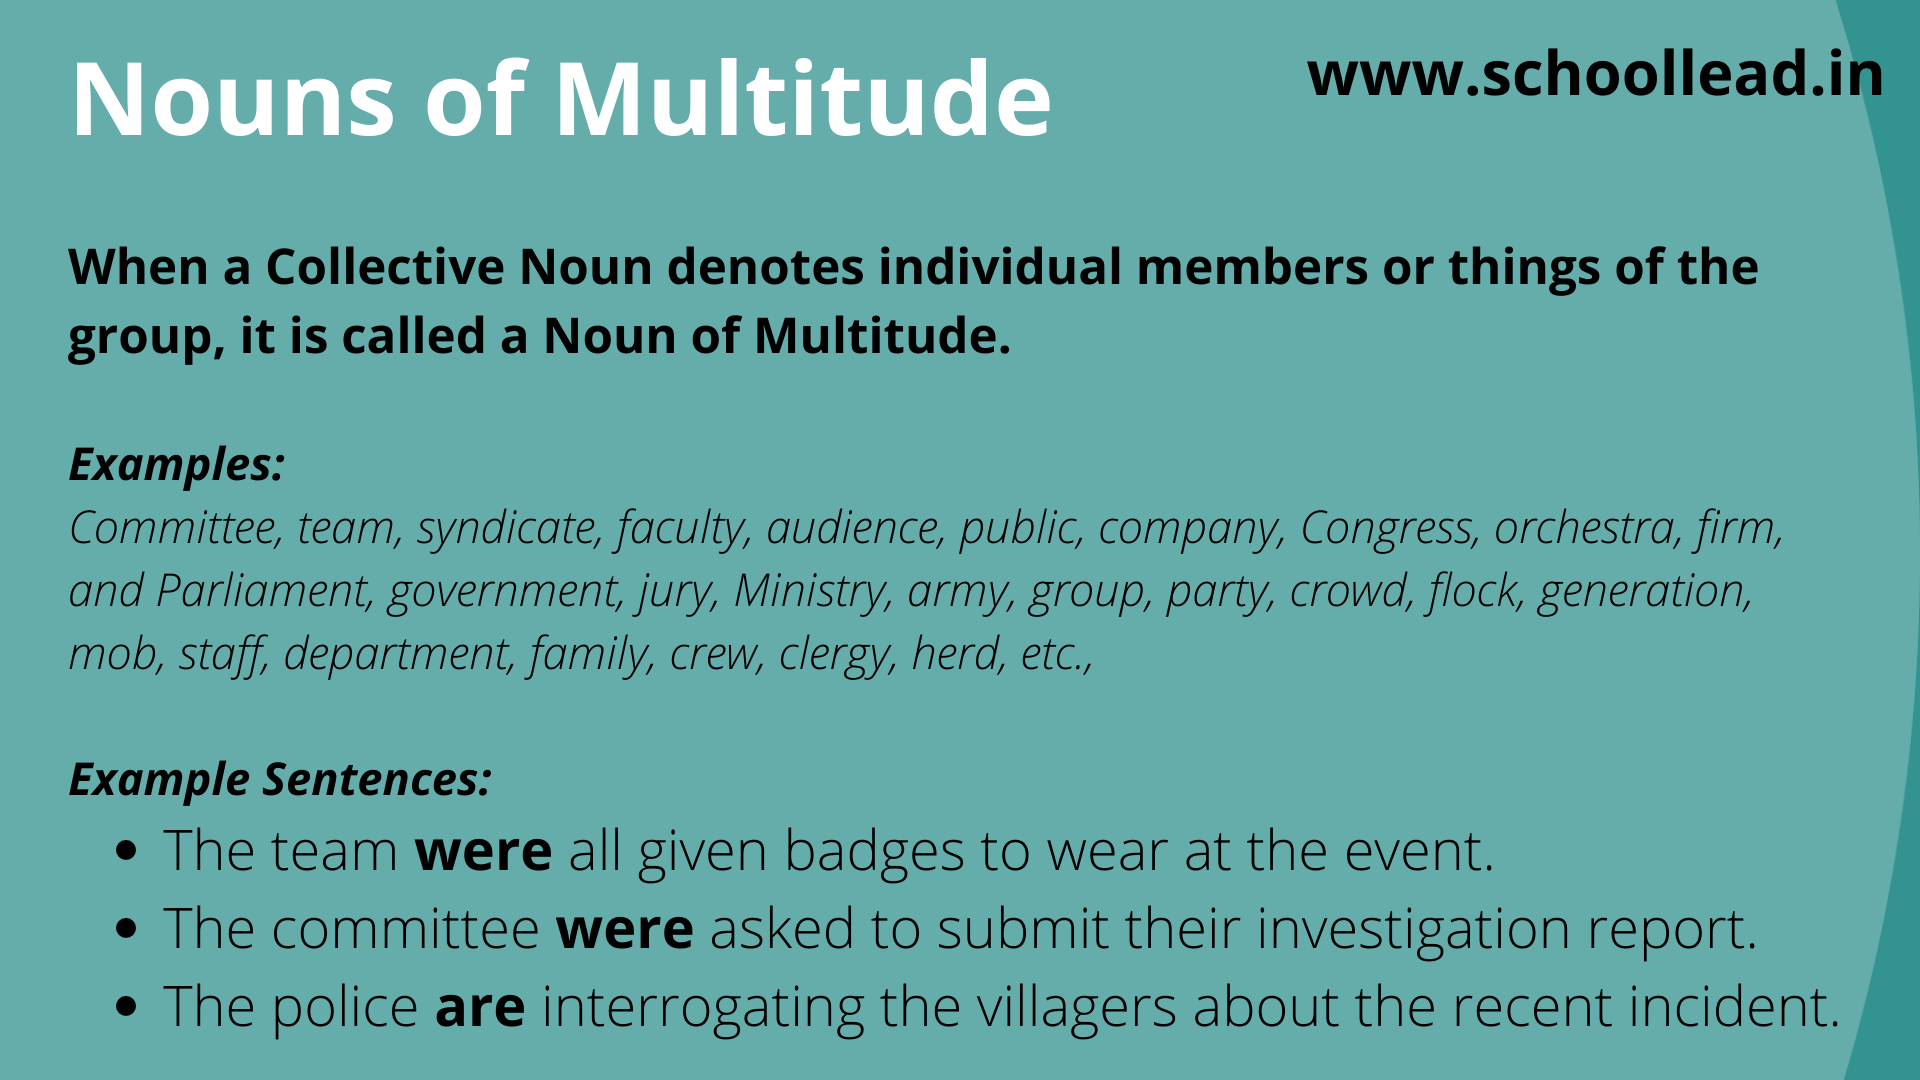 Nouns of Multitude